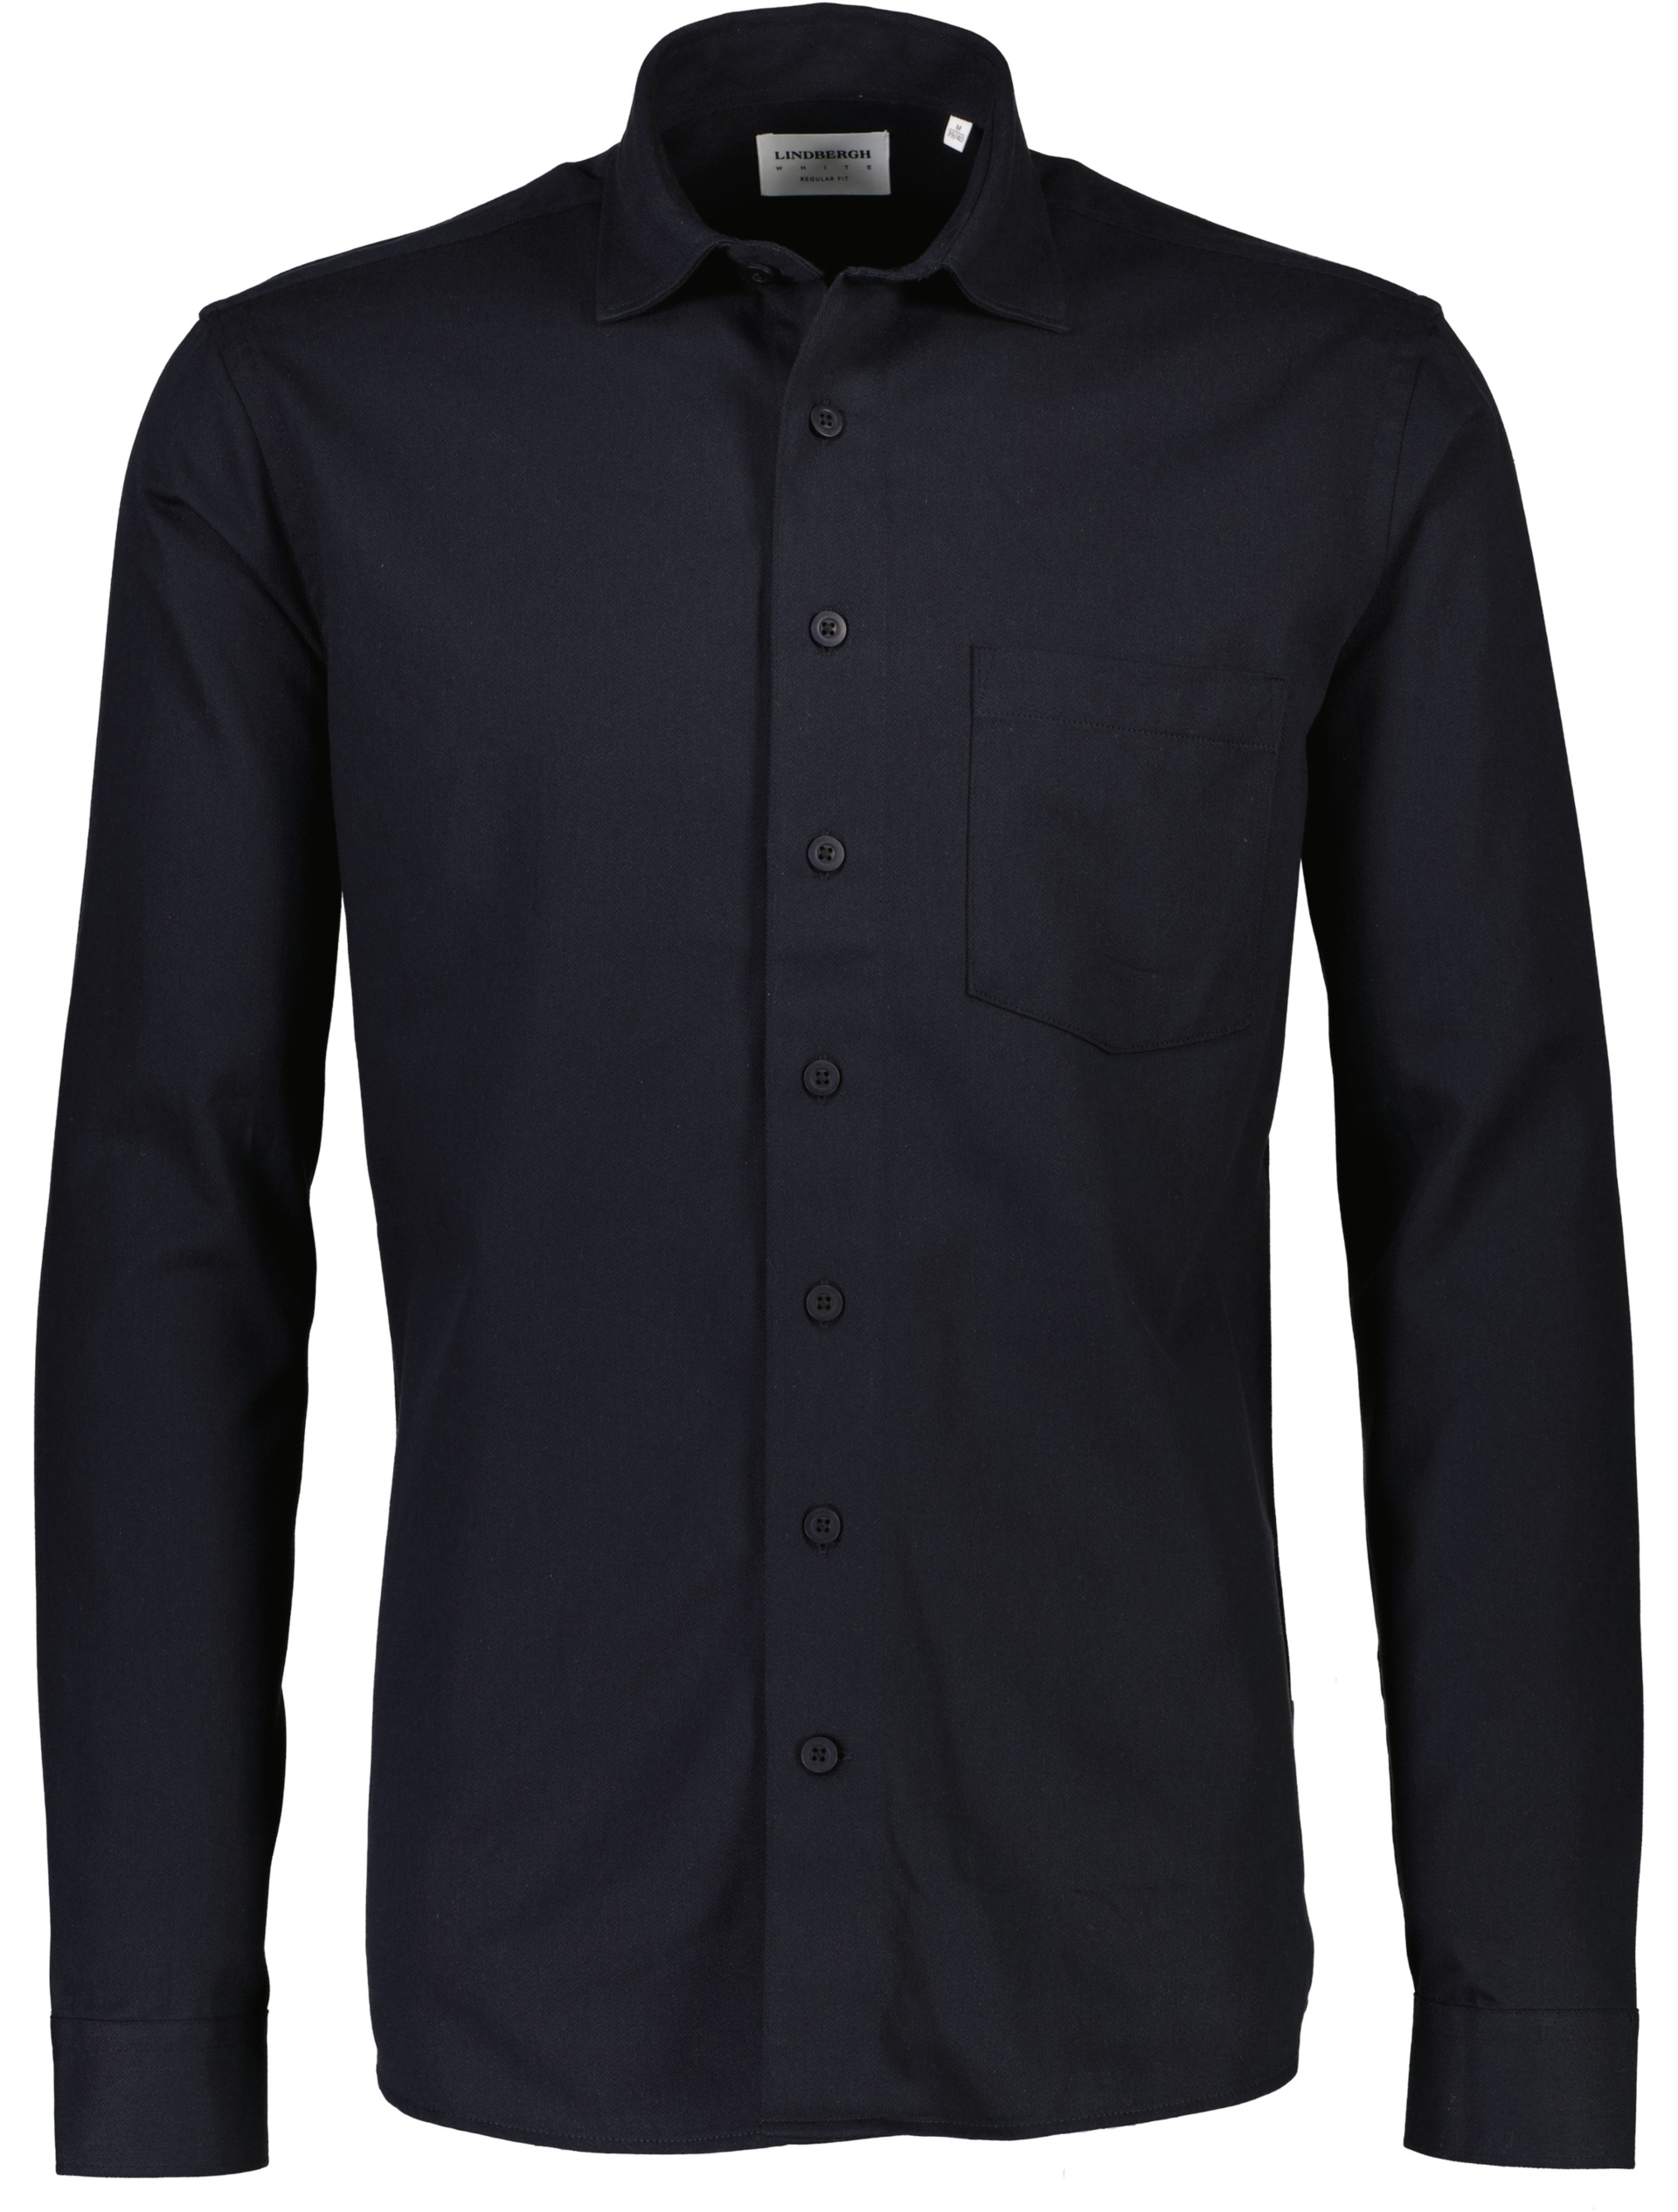 Lindbergh Casual shirt black / black